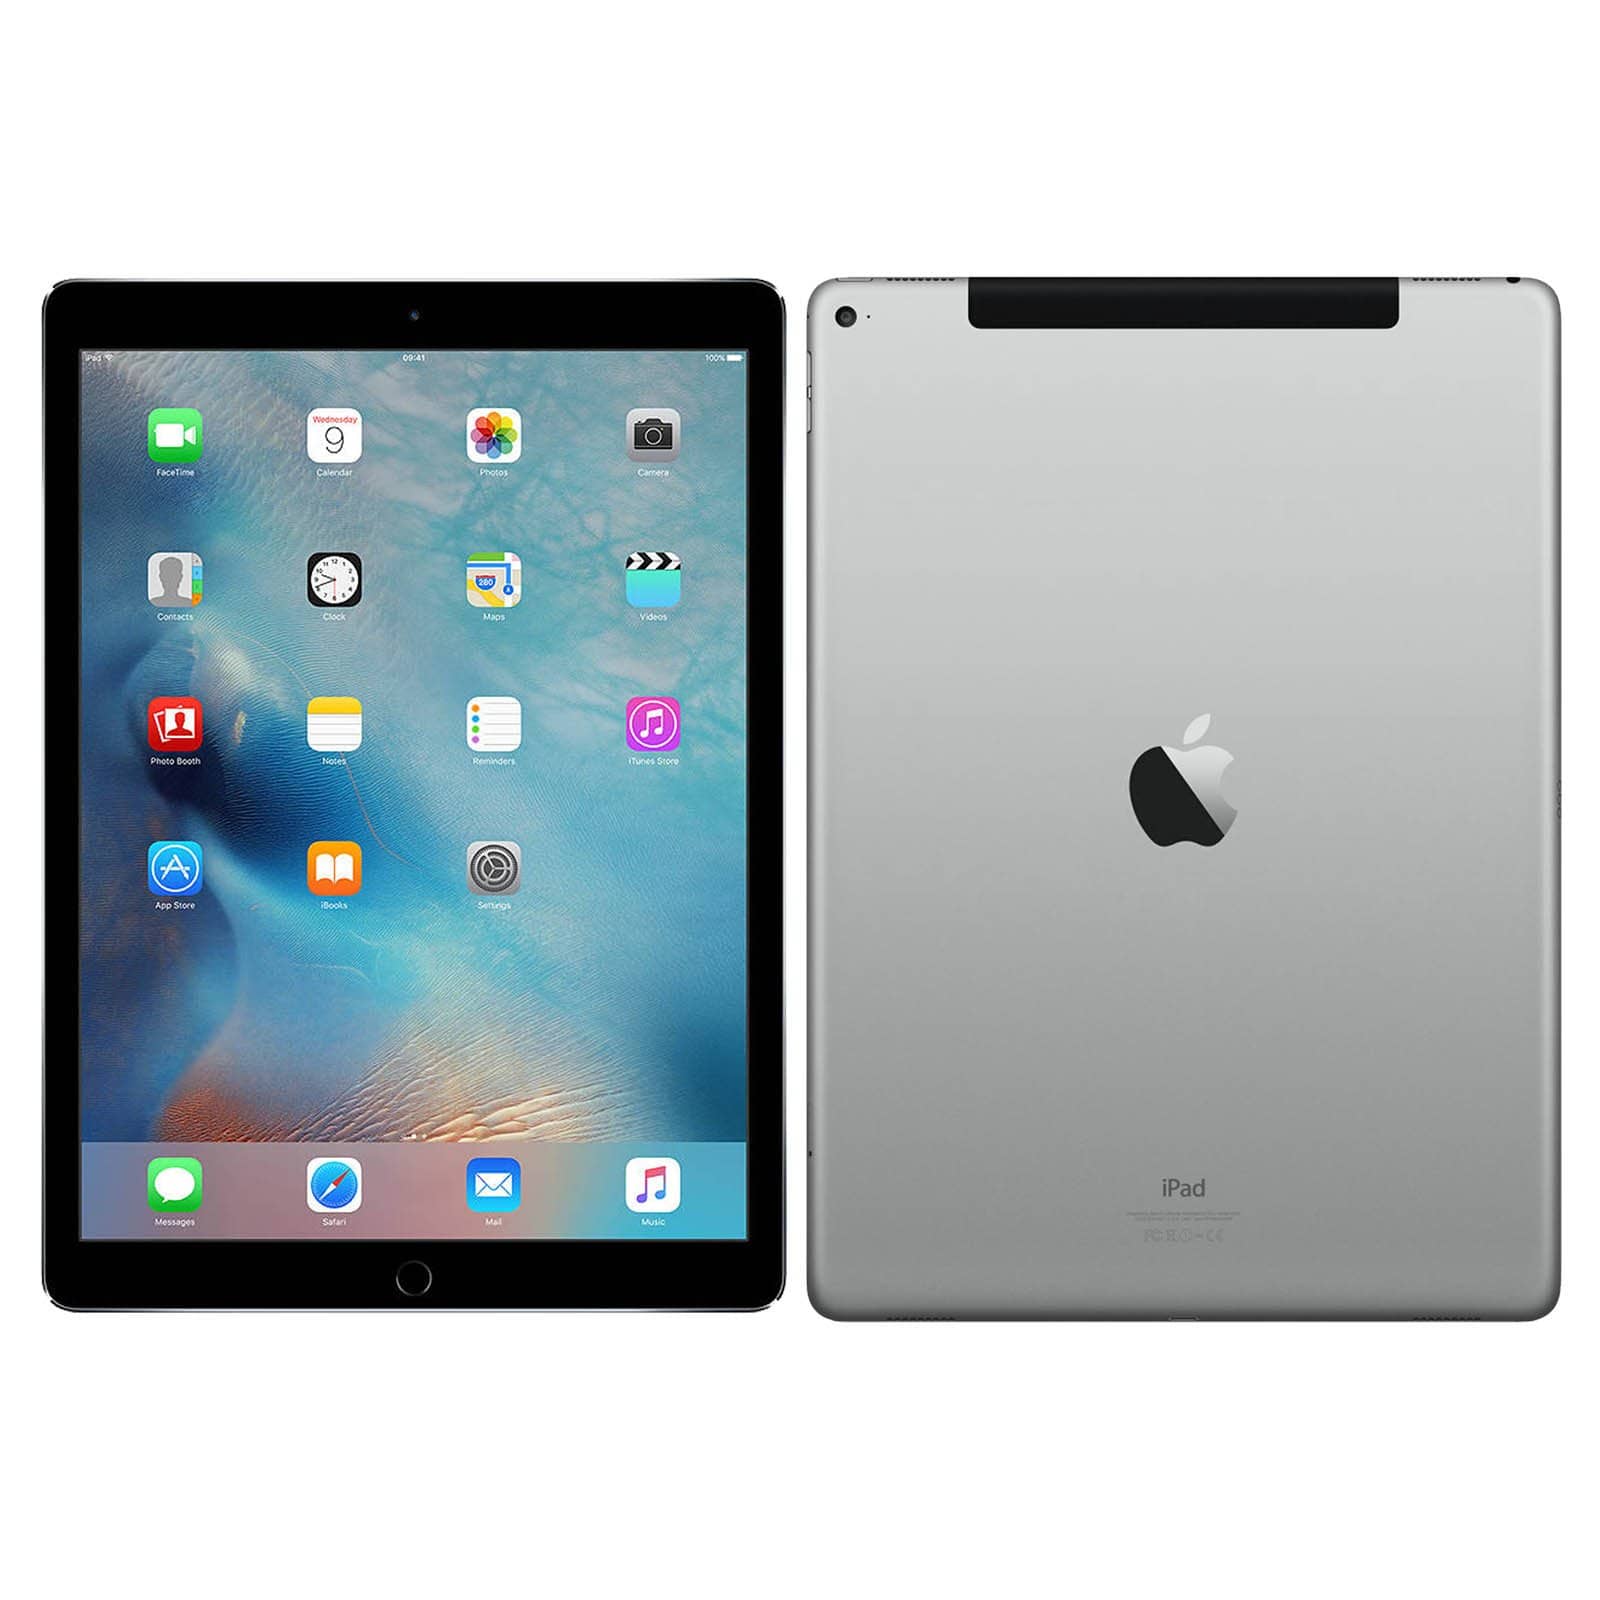 iPad Pro 12.9 Inch 2nd Gen 64GB Space Grey Good - WiFi 64GB Space Grey Good